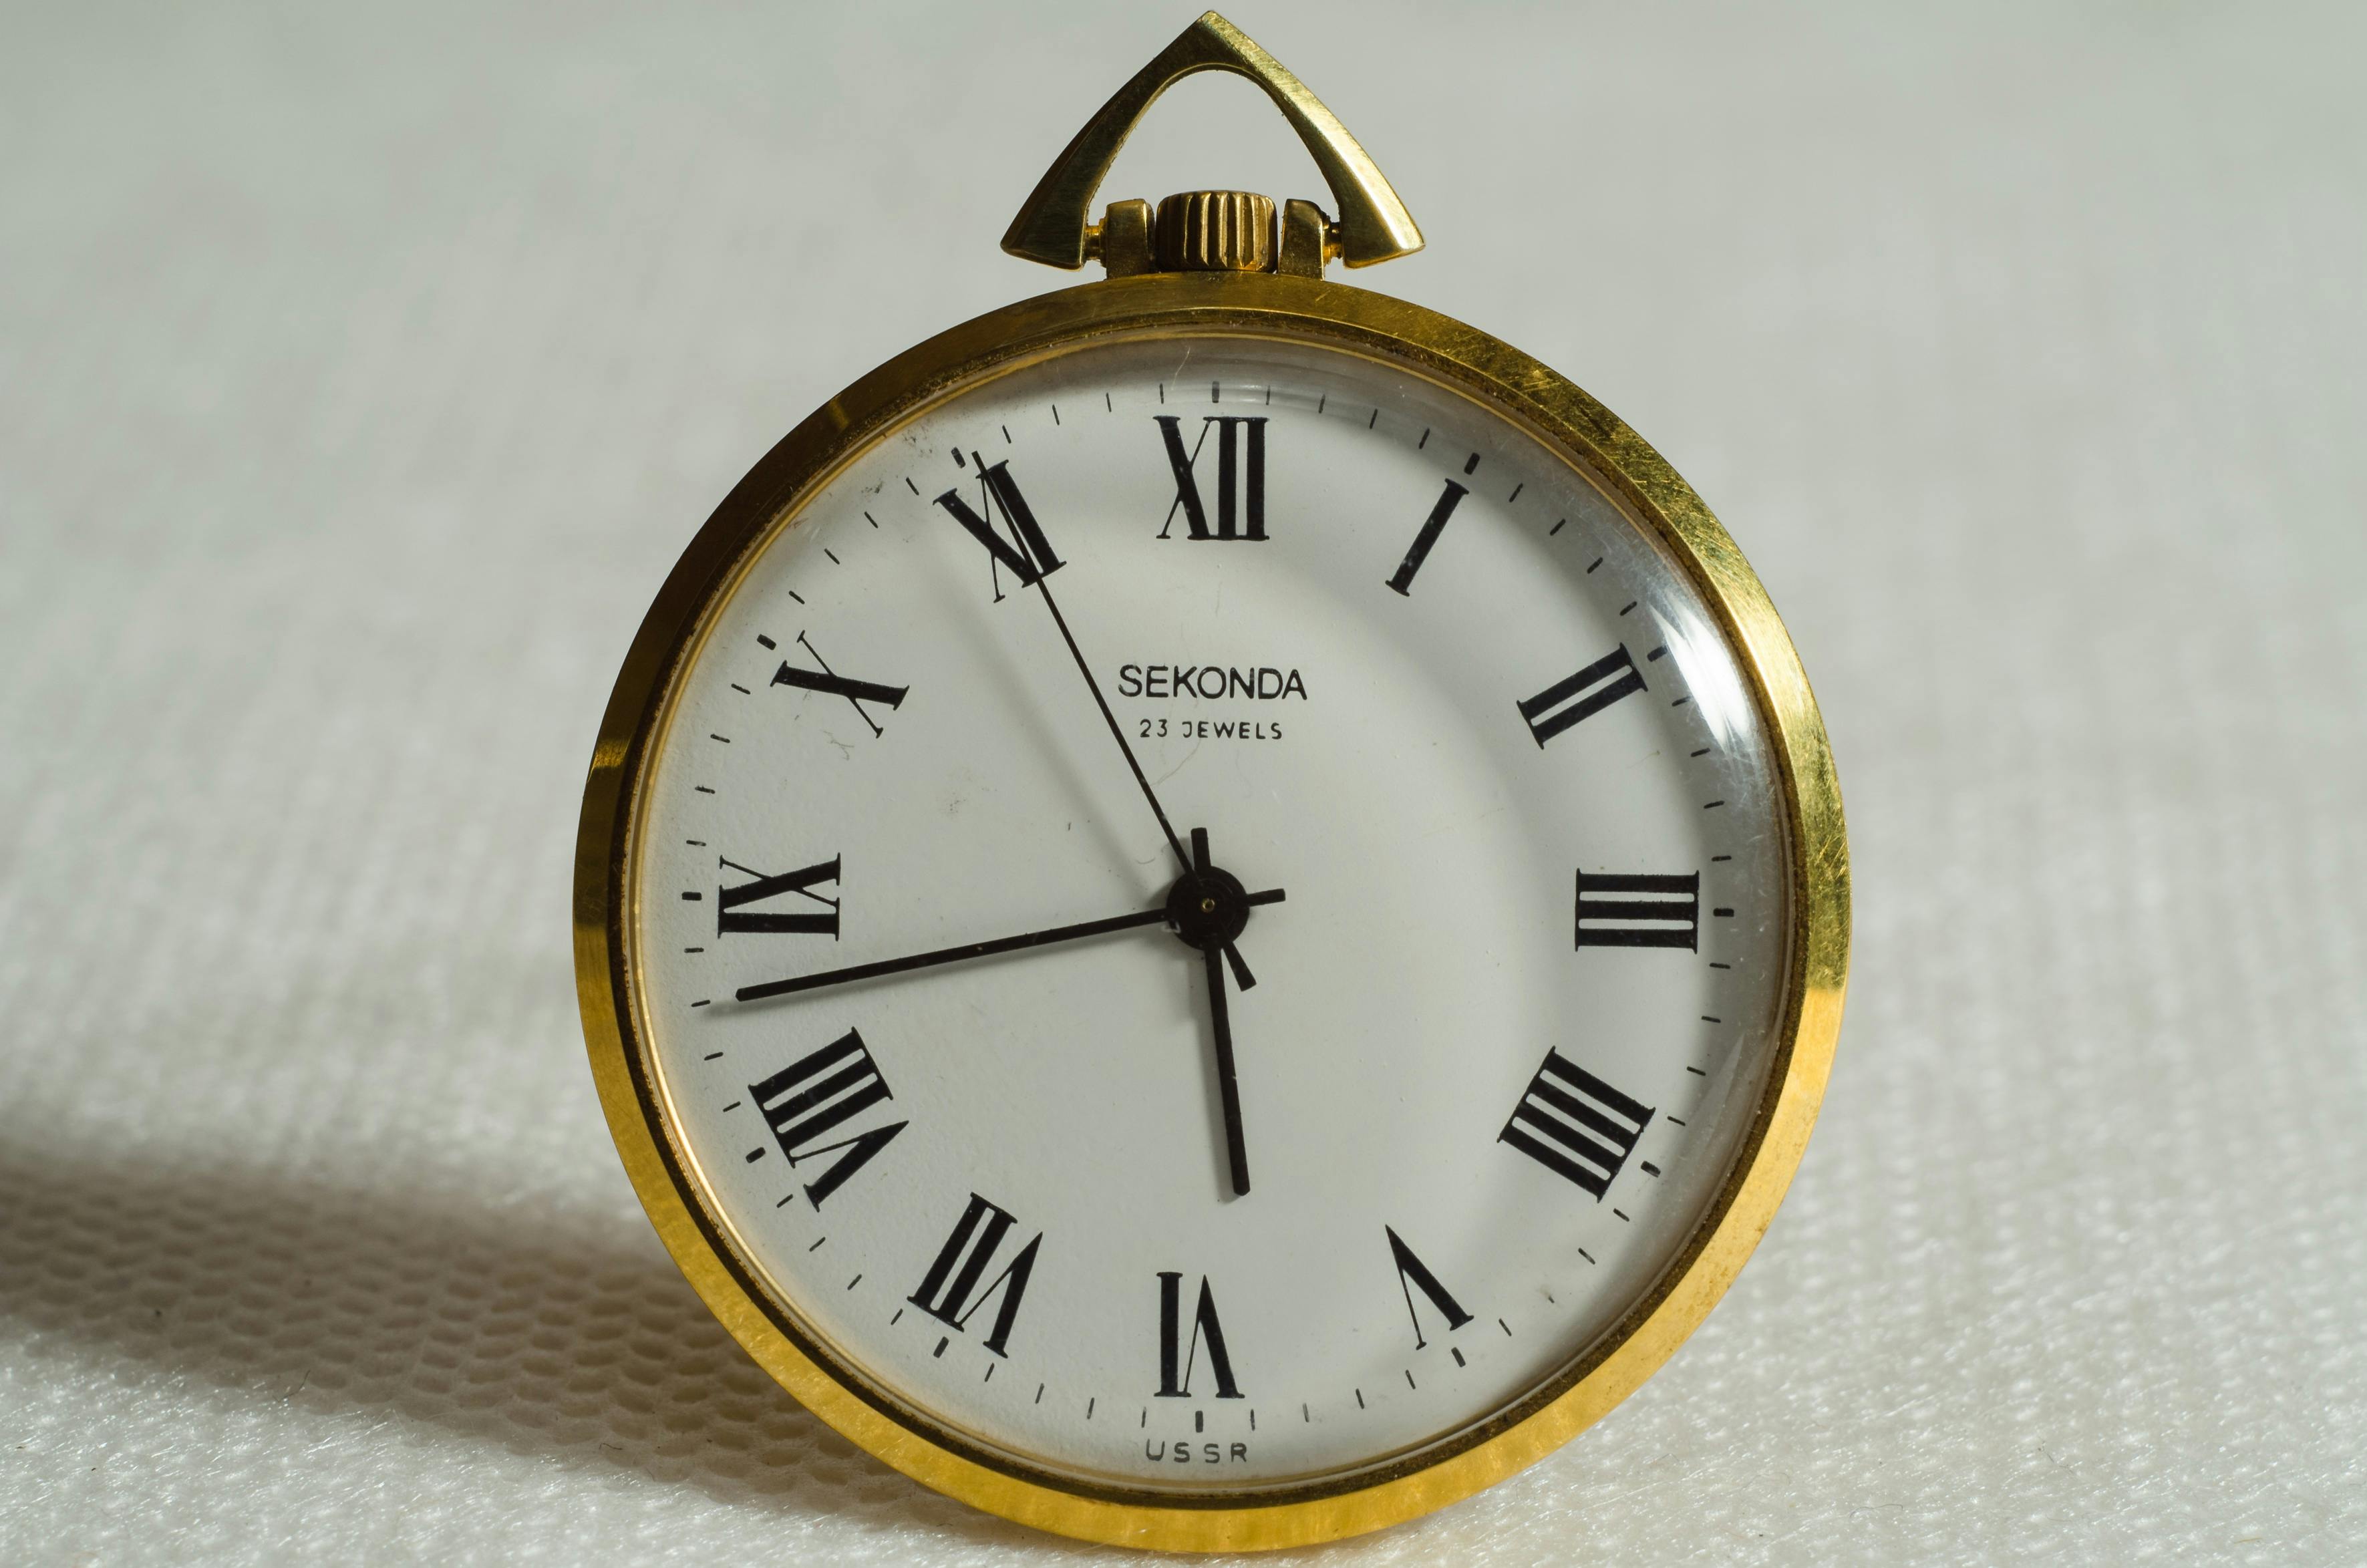 Roman Numeral Round Analog Clock at 4:02 · Free Stock Photo